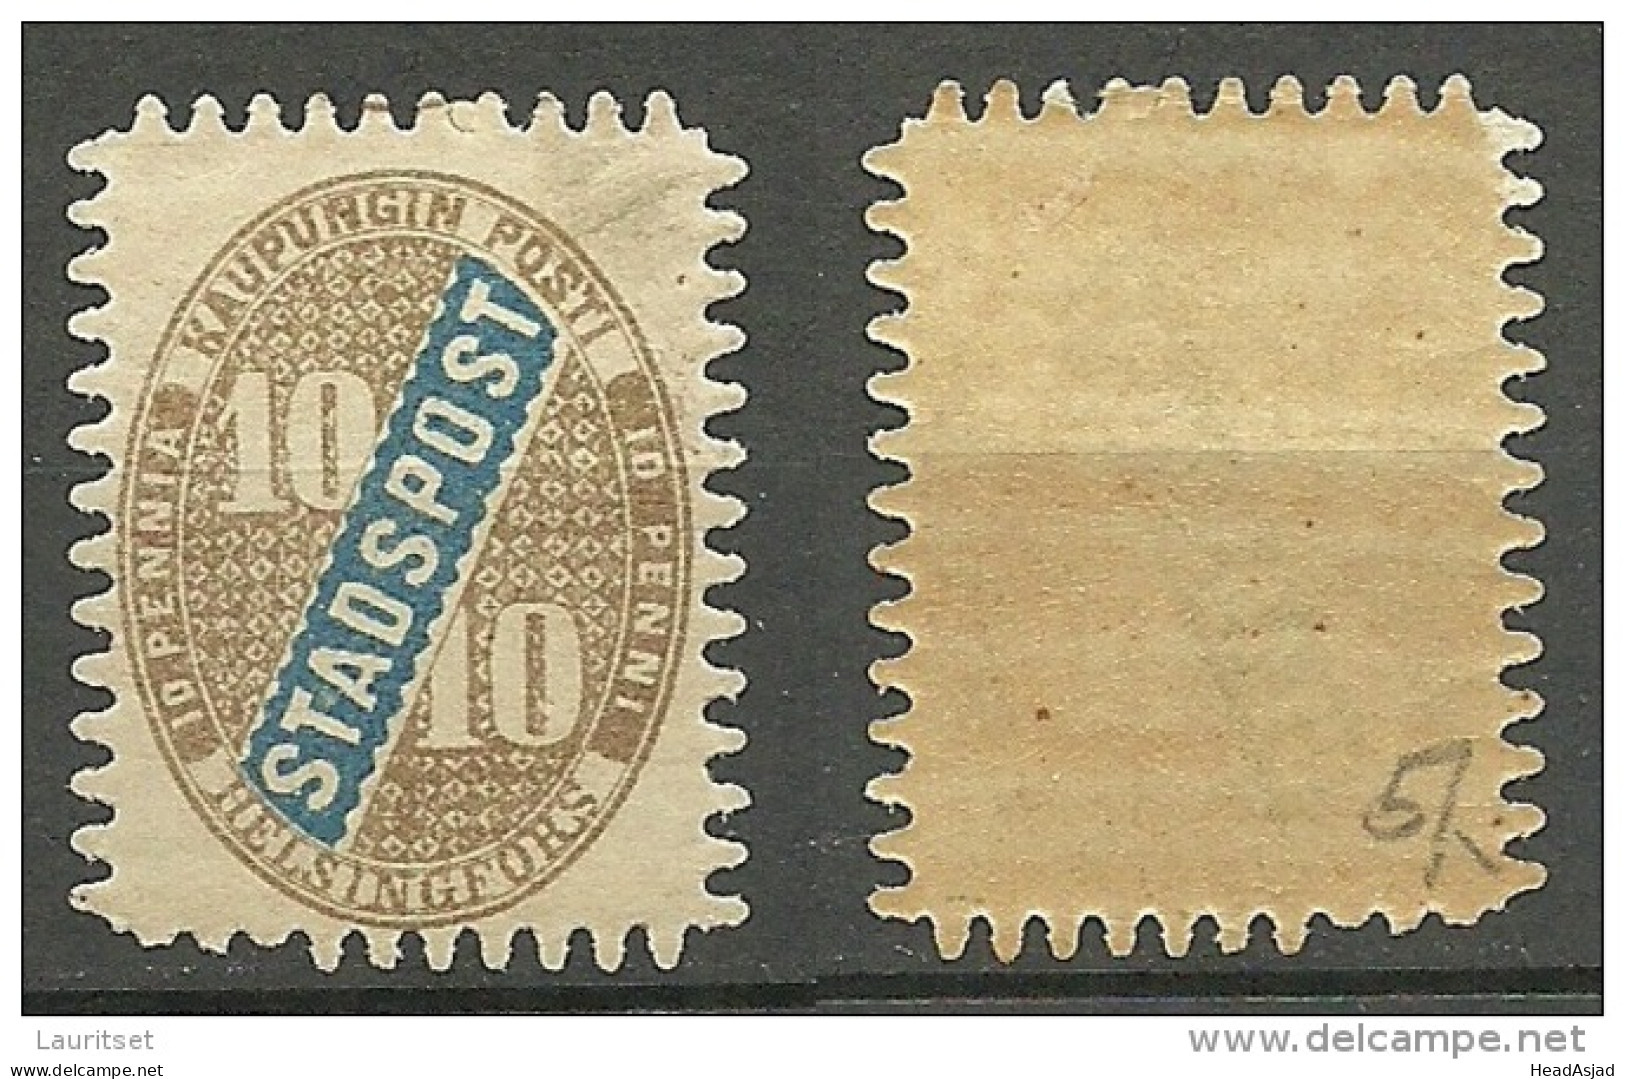 FINLAND HELSINKI 1868/70 Local City Post Stadtpost 10 Pen * - Lokale Uitgaven